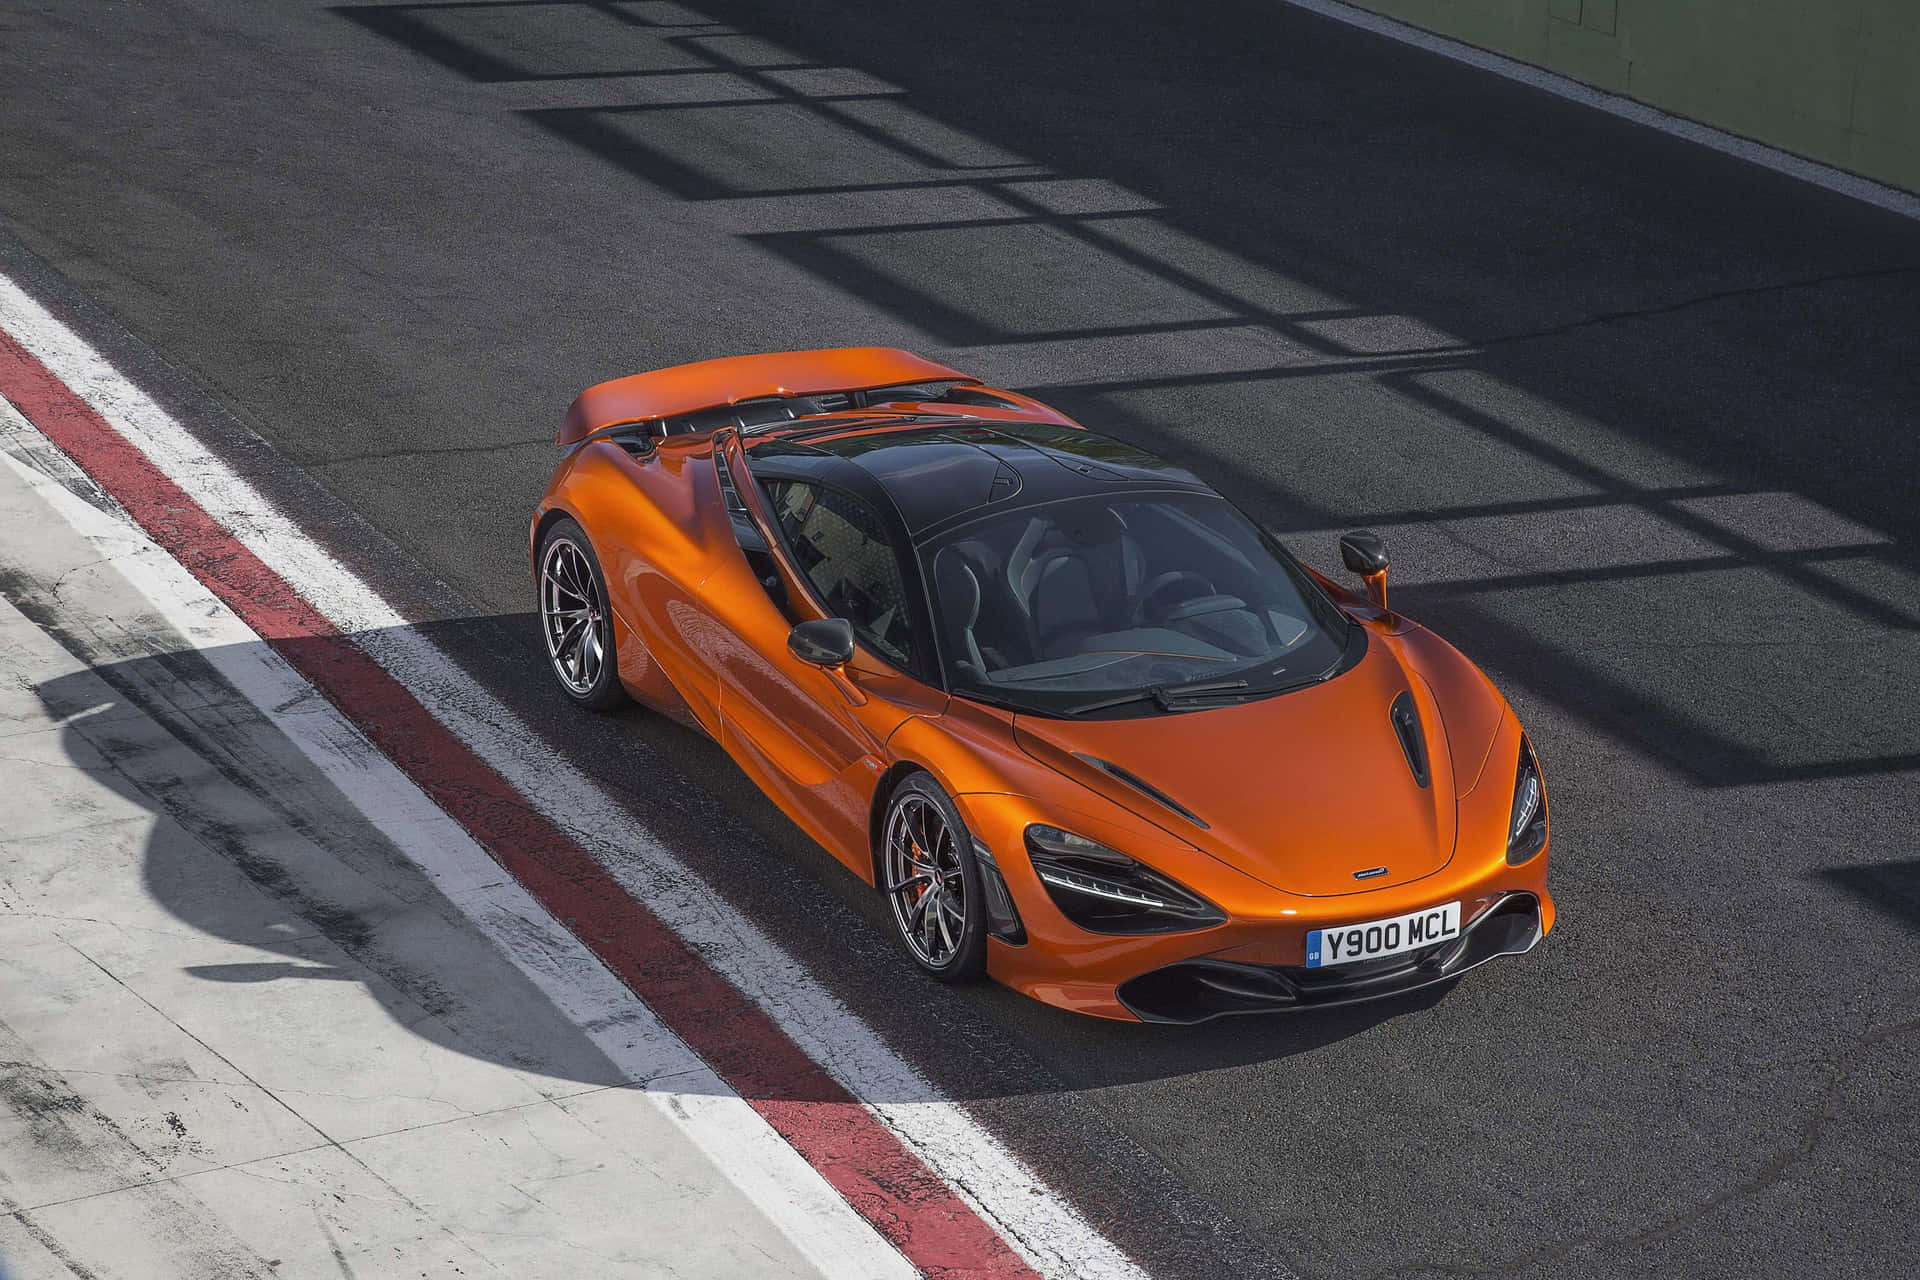 Enjoy speed and luxury with the McLaren 720S